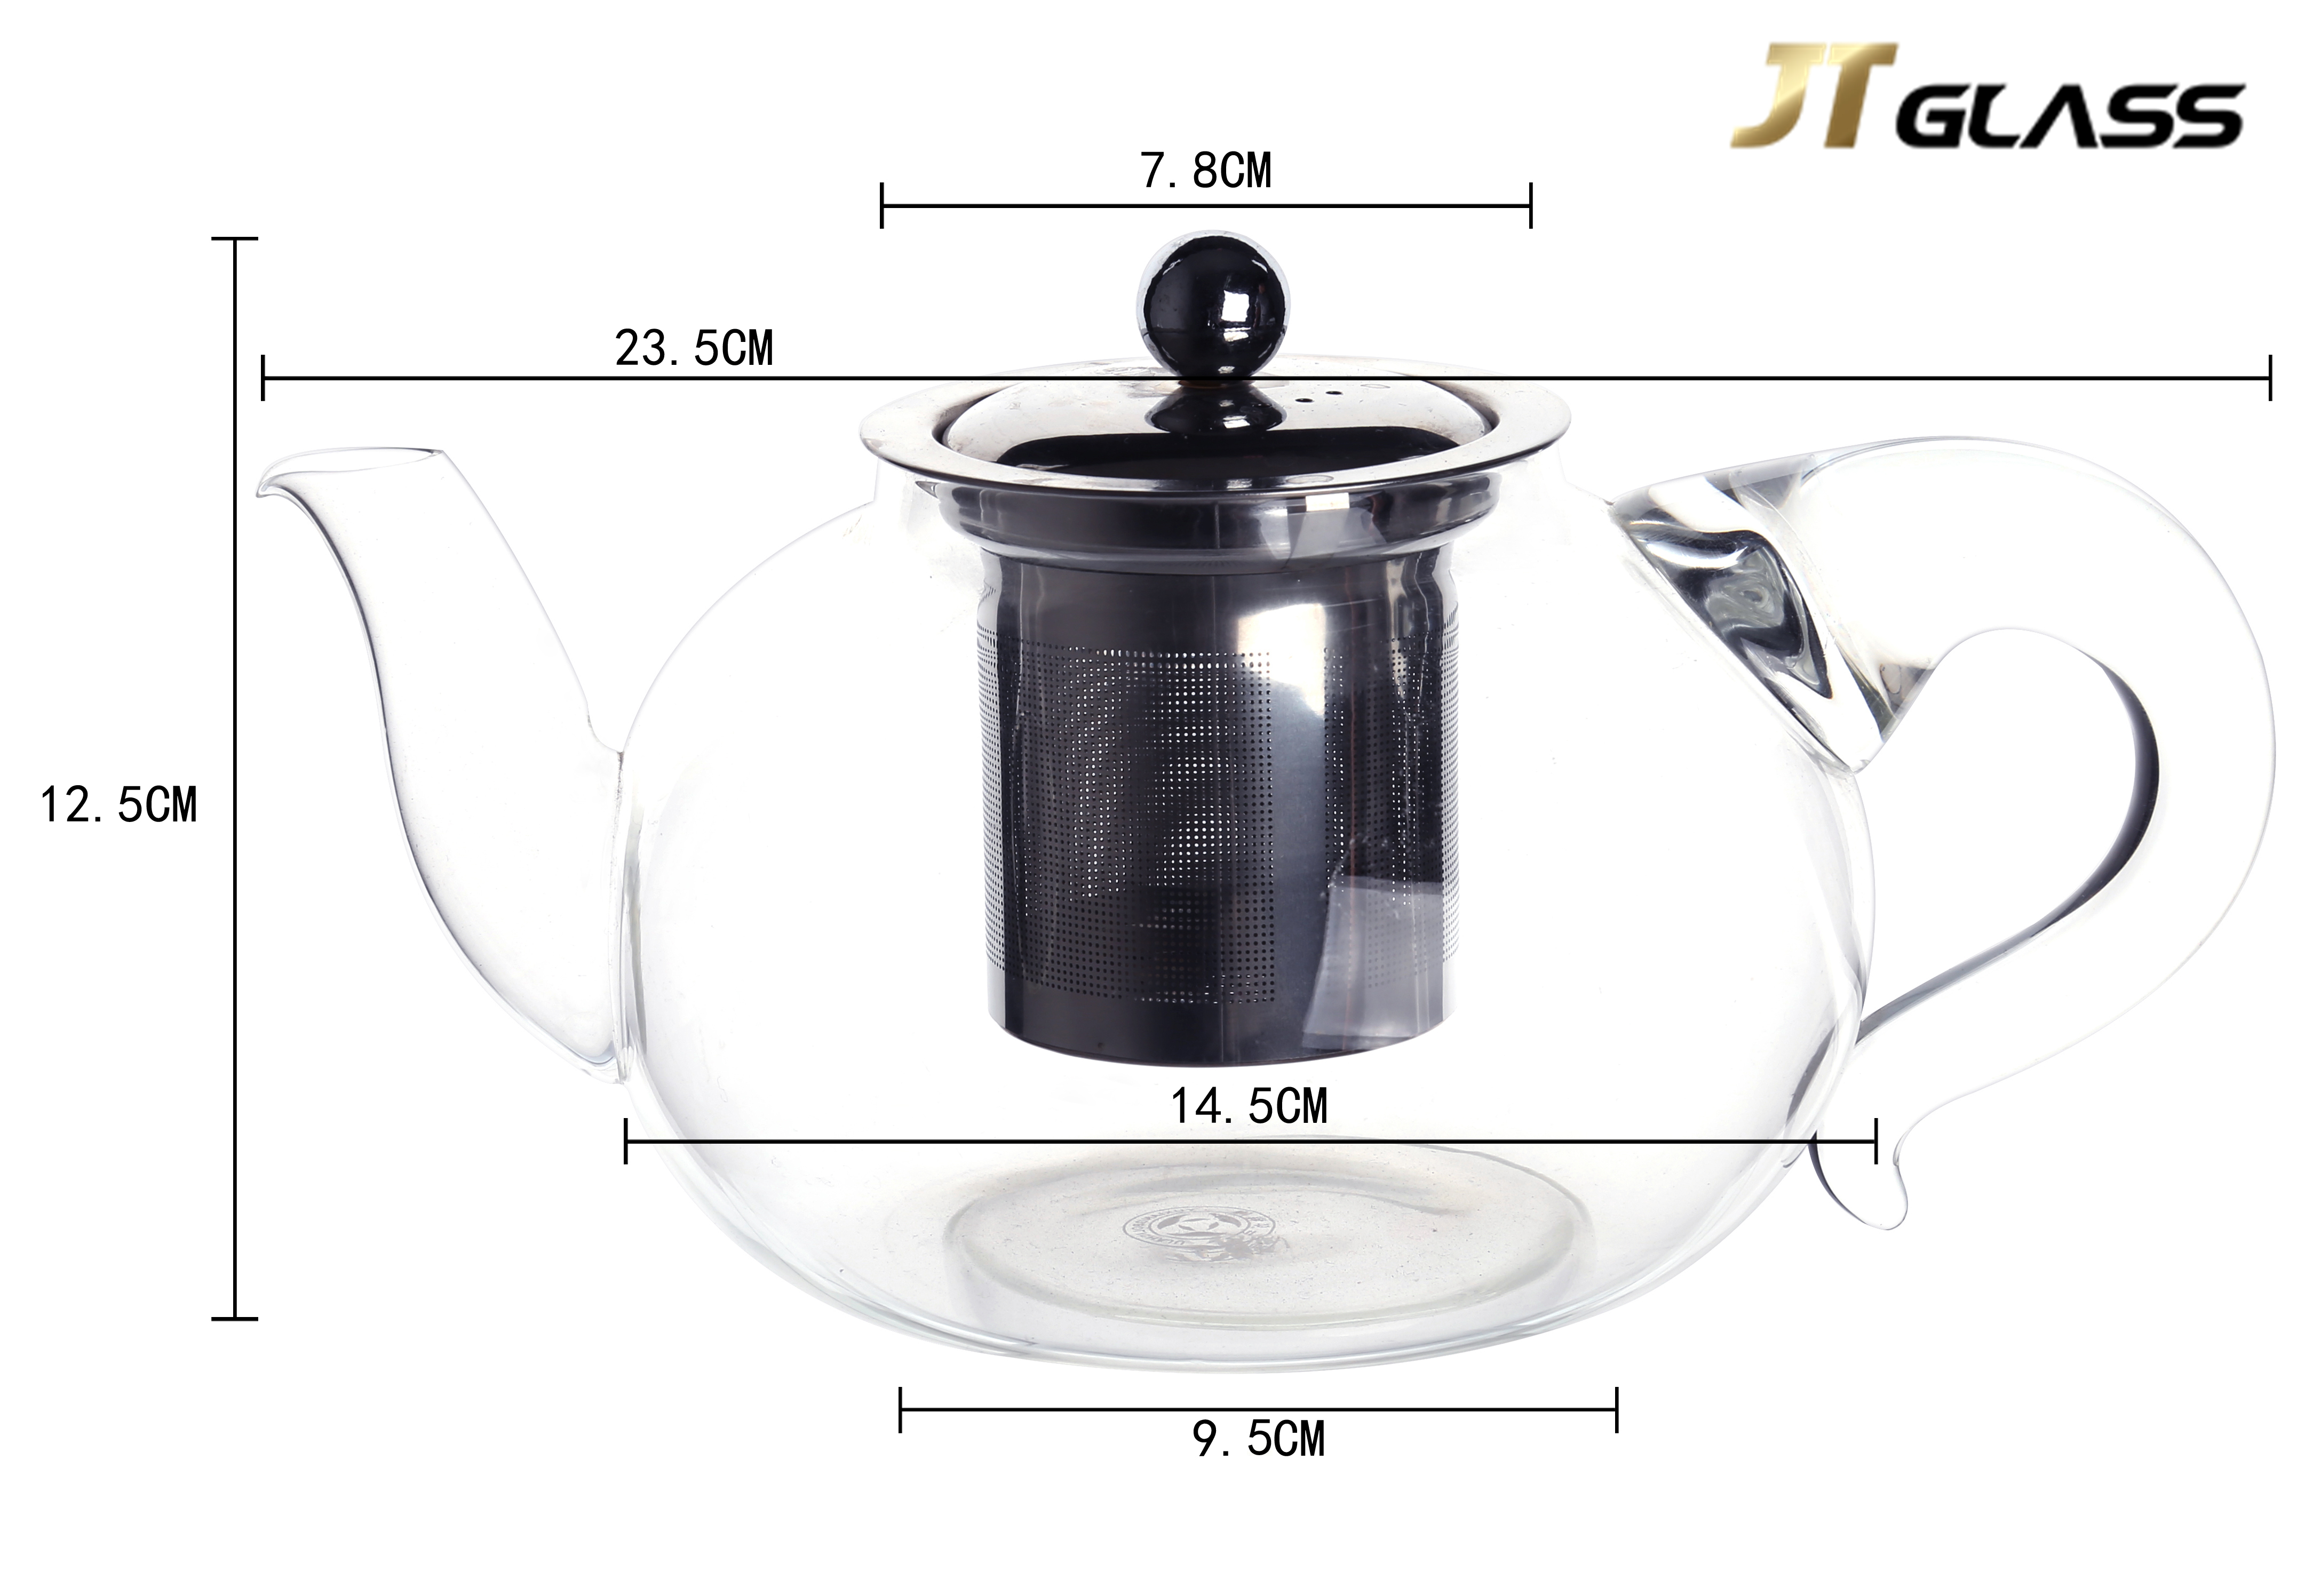  Transparent Heat Resistant Glass Teapot And Injector Suitable for Loose Tea Transparent Glass Teapot 